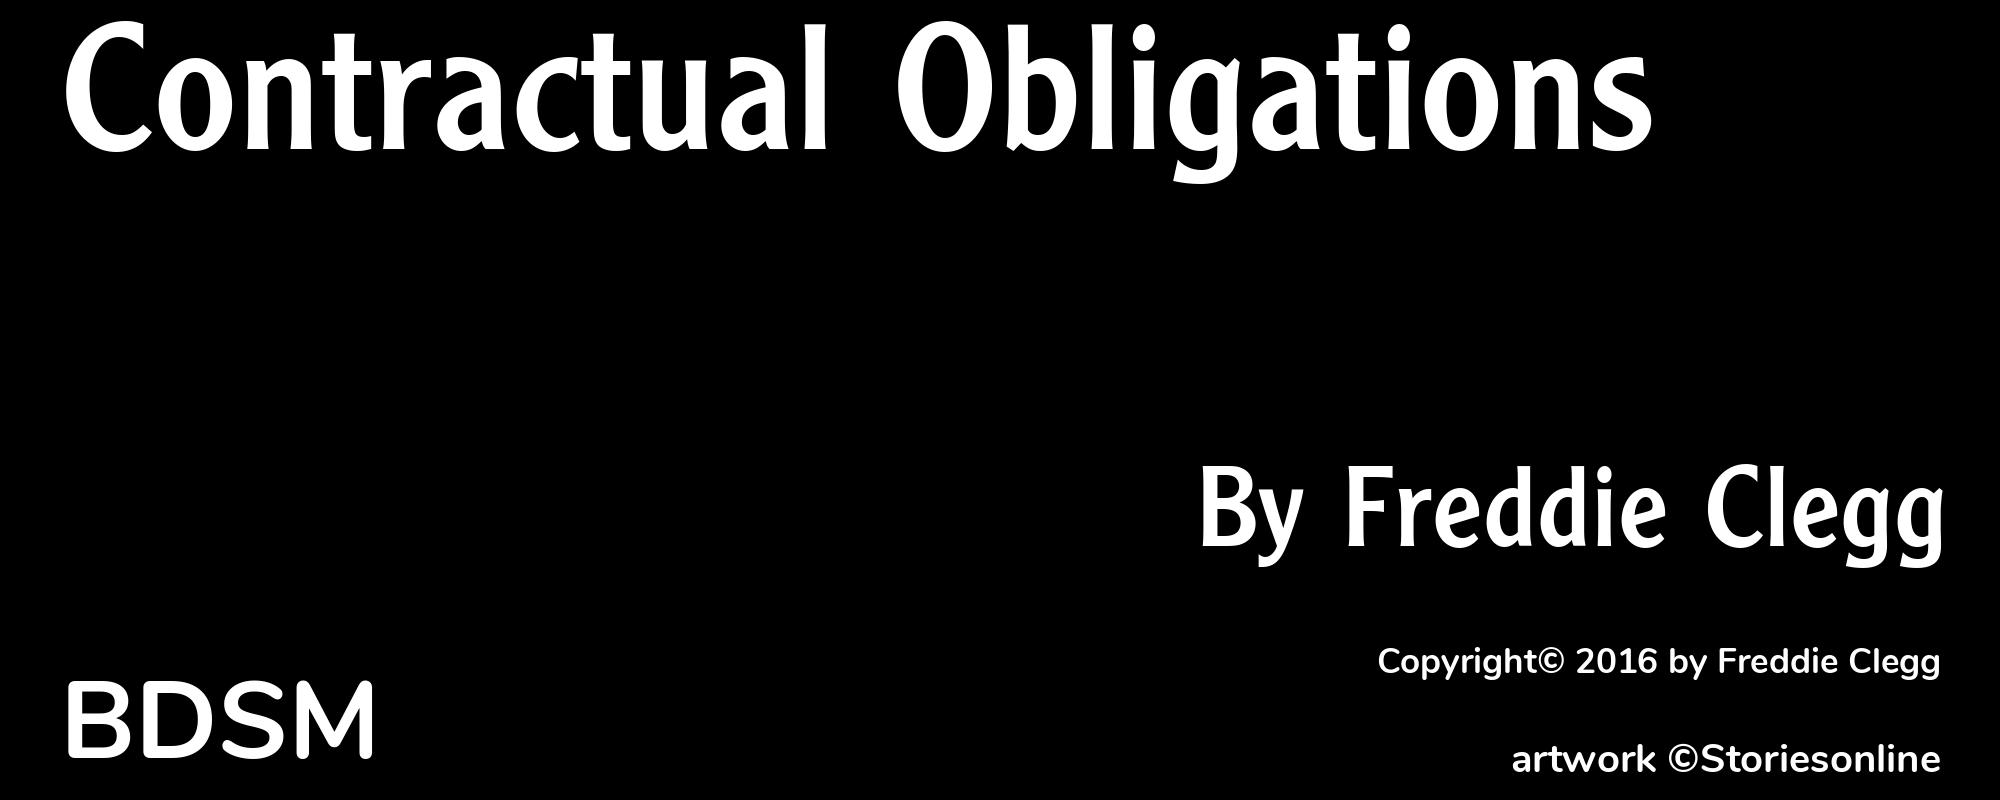 Contractual Obligations - Cover